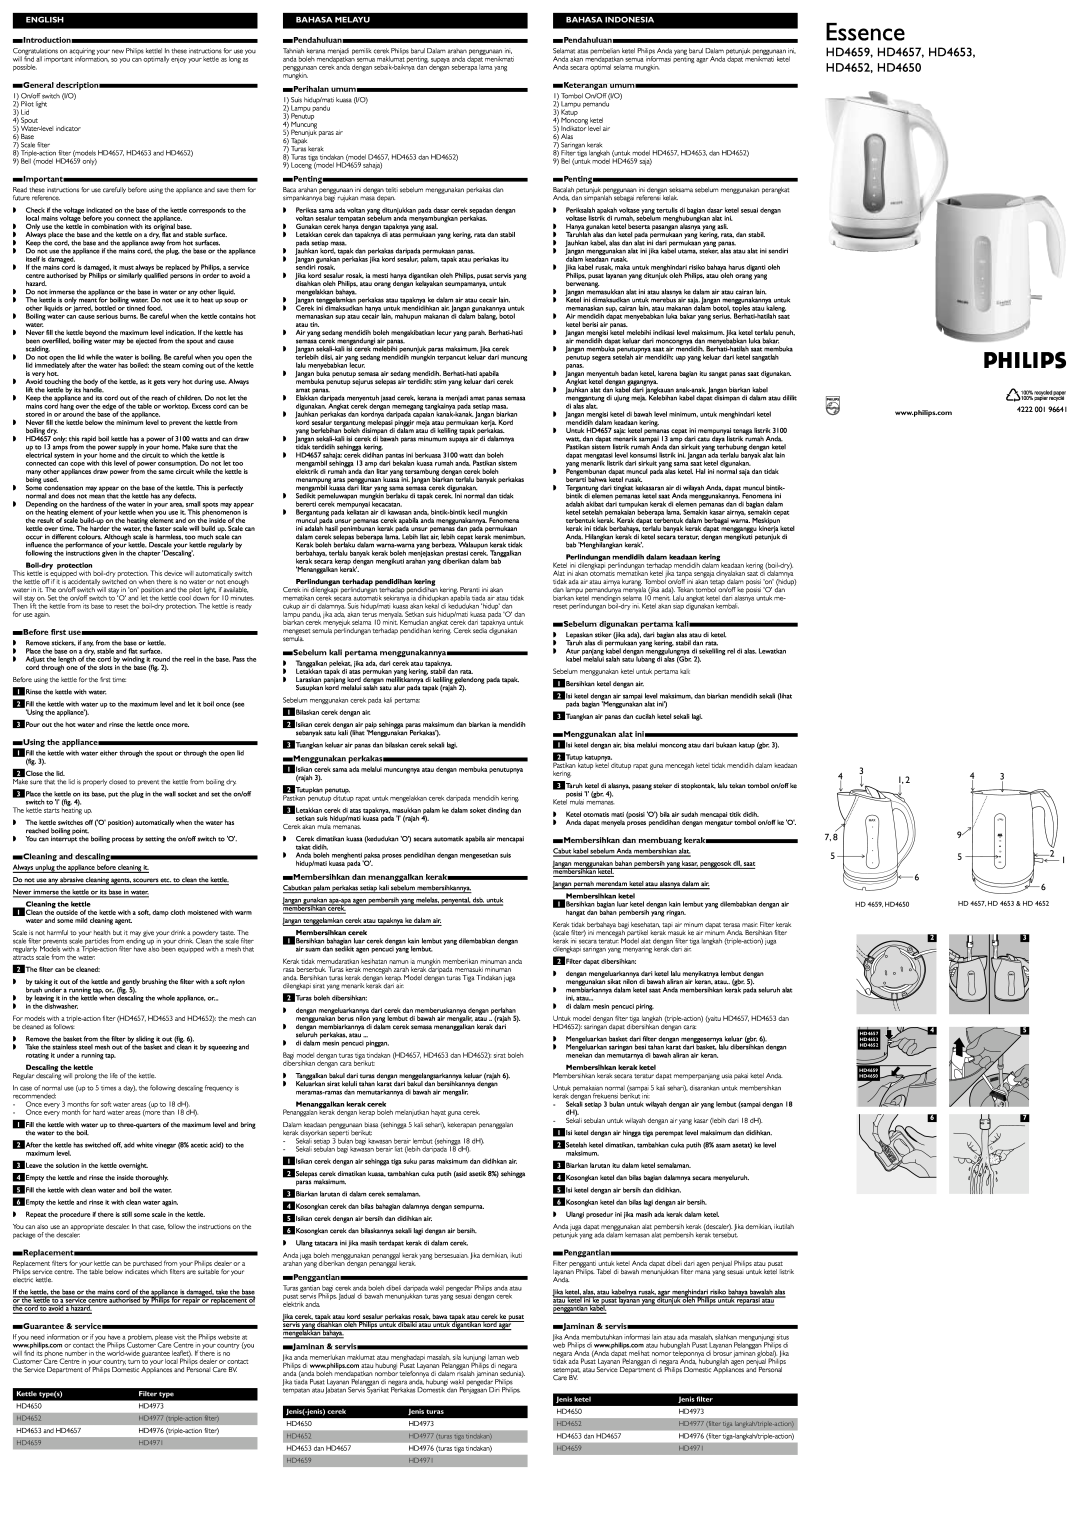 Philips manual Essence, HD4659, HD4657, HD4653 HD4652, HD4650, English, Bahasa Melayu, Bahasa Indonesia 